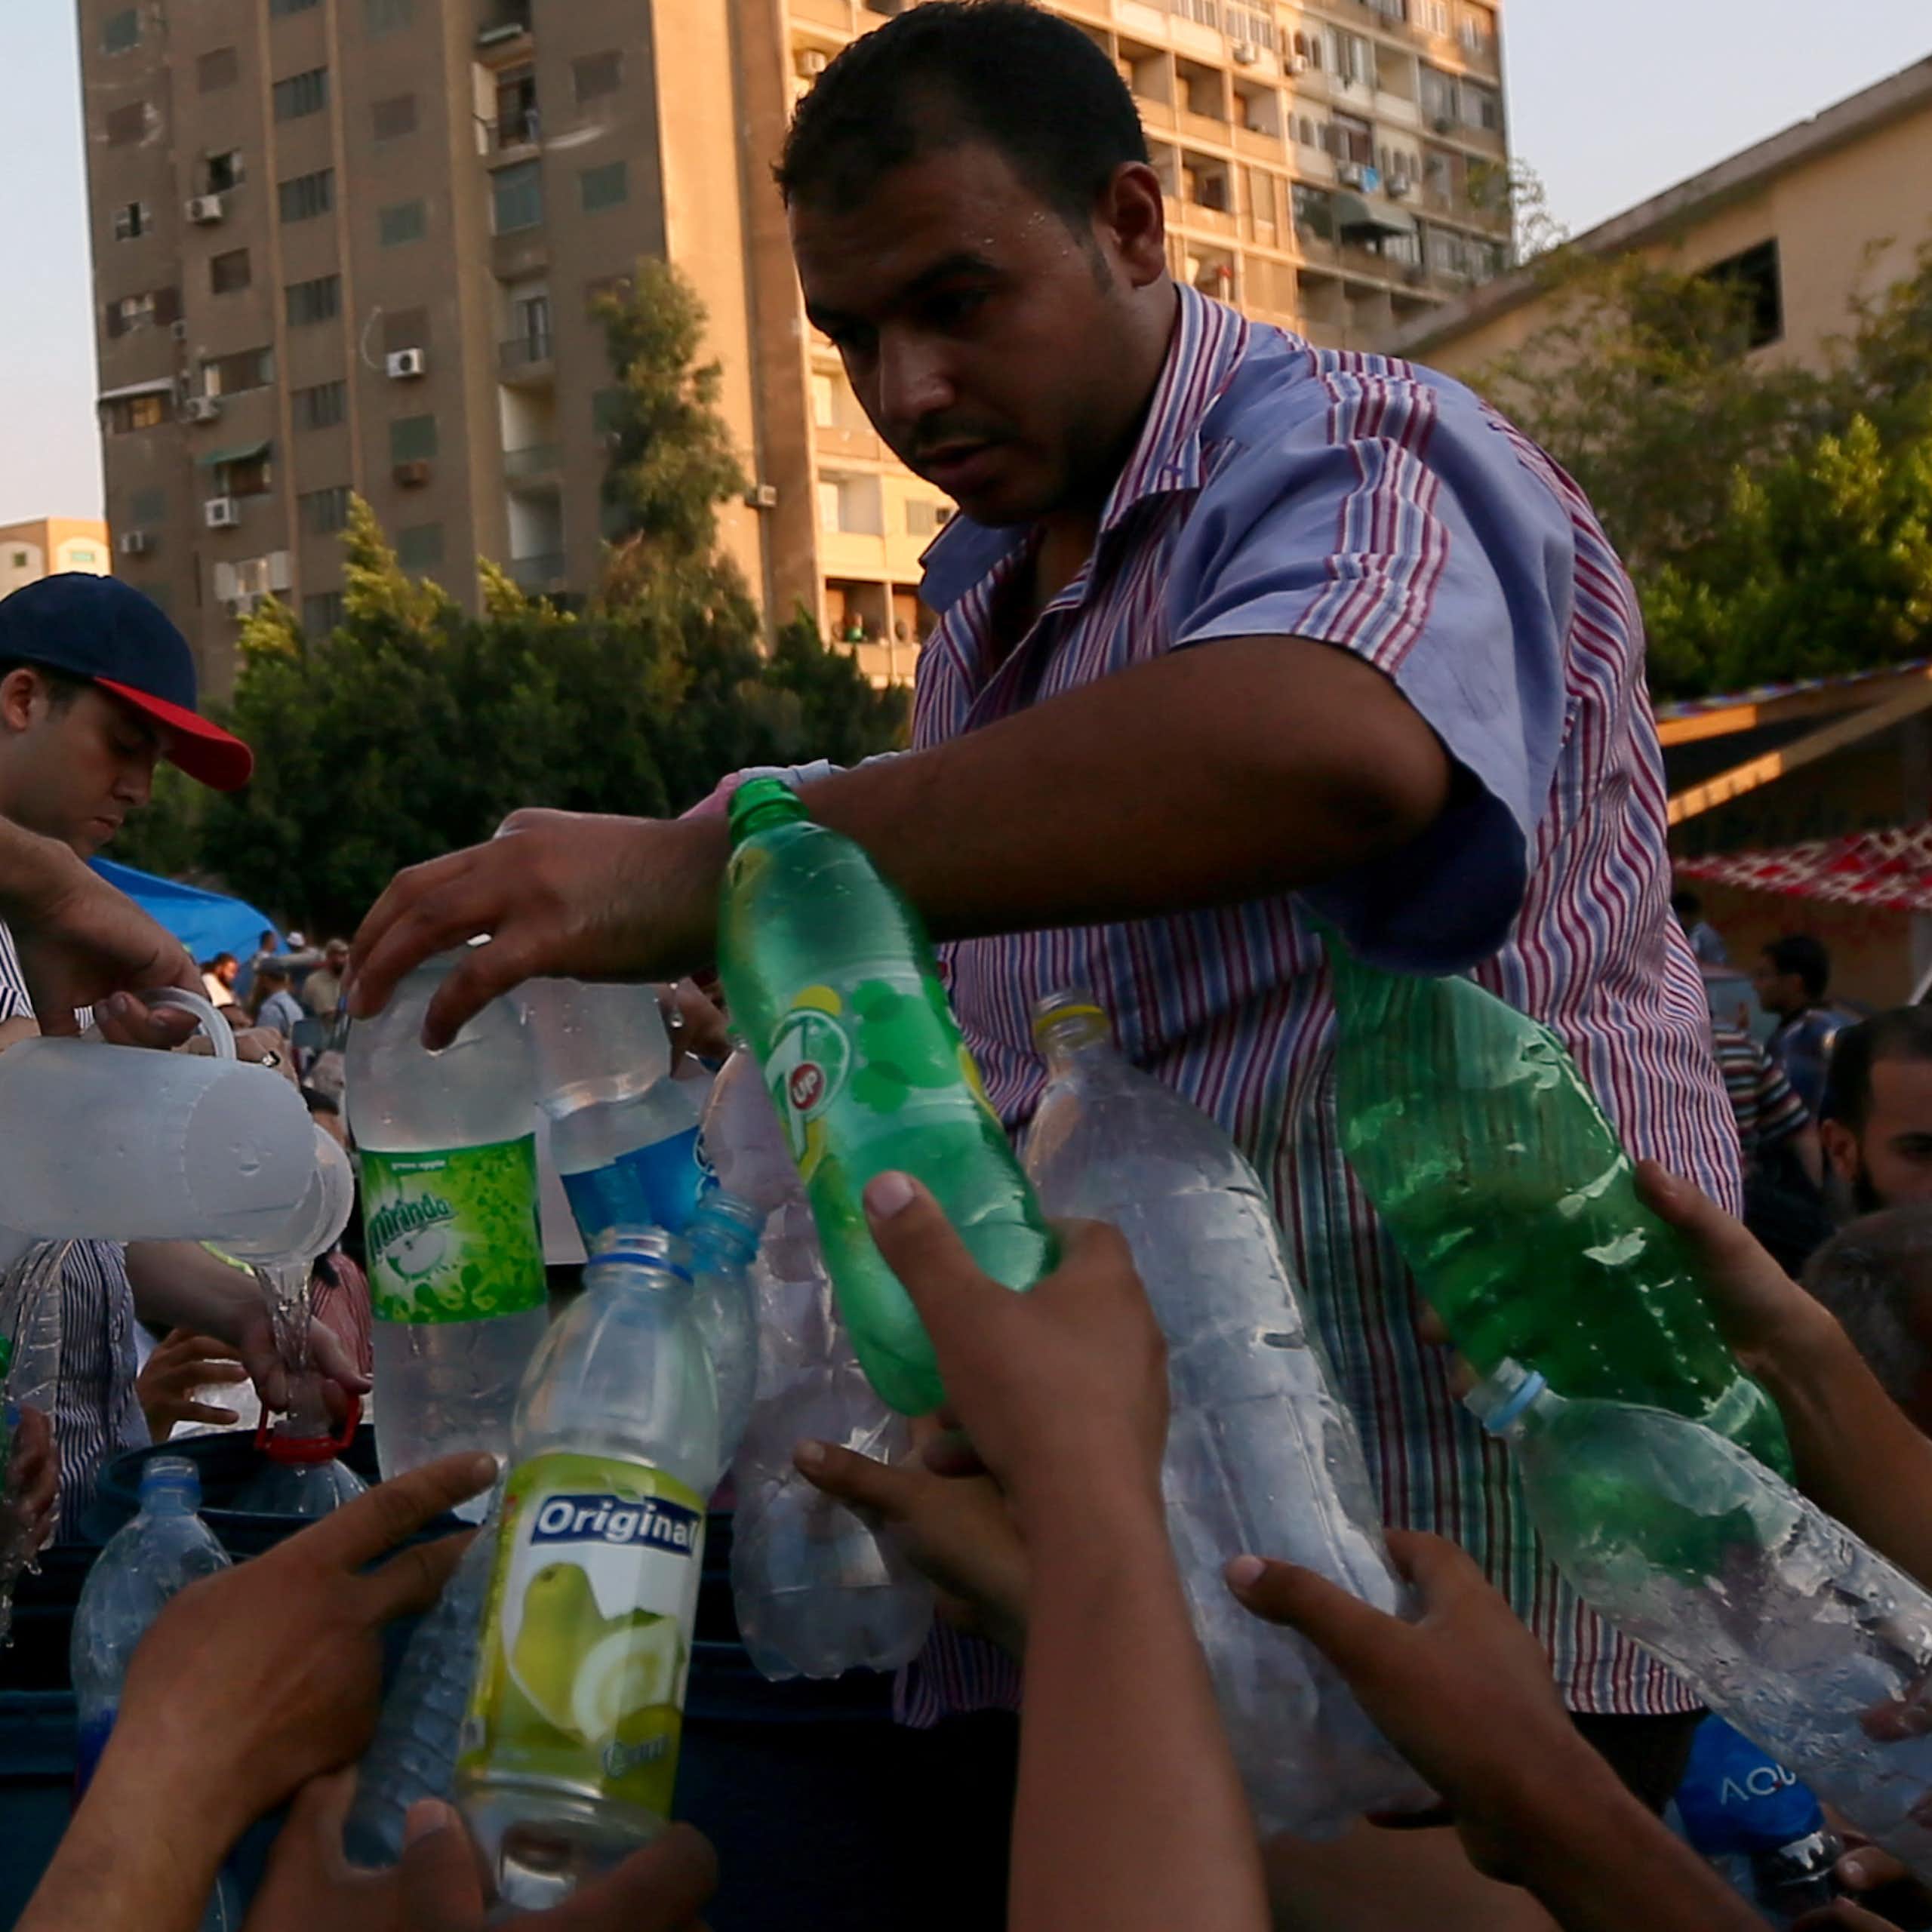 Men fill up water bottles from a jug.